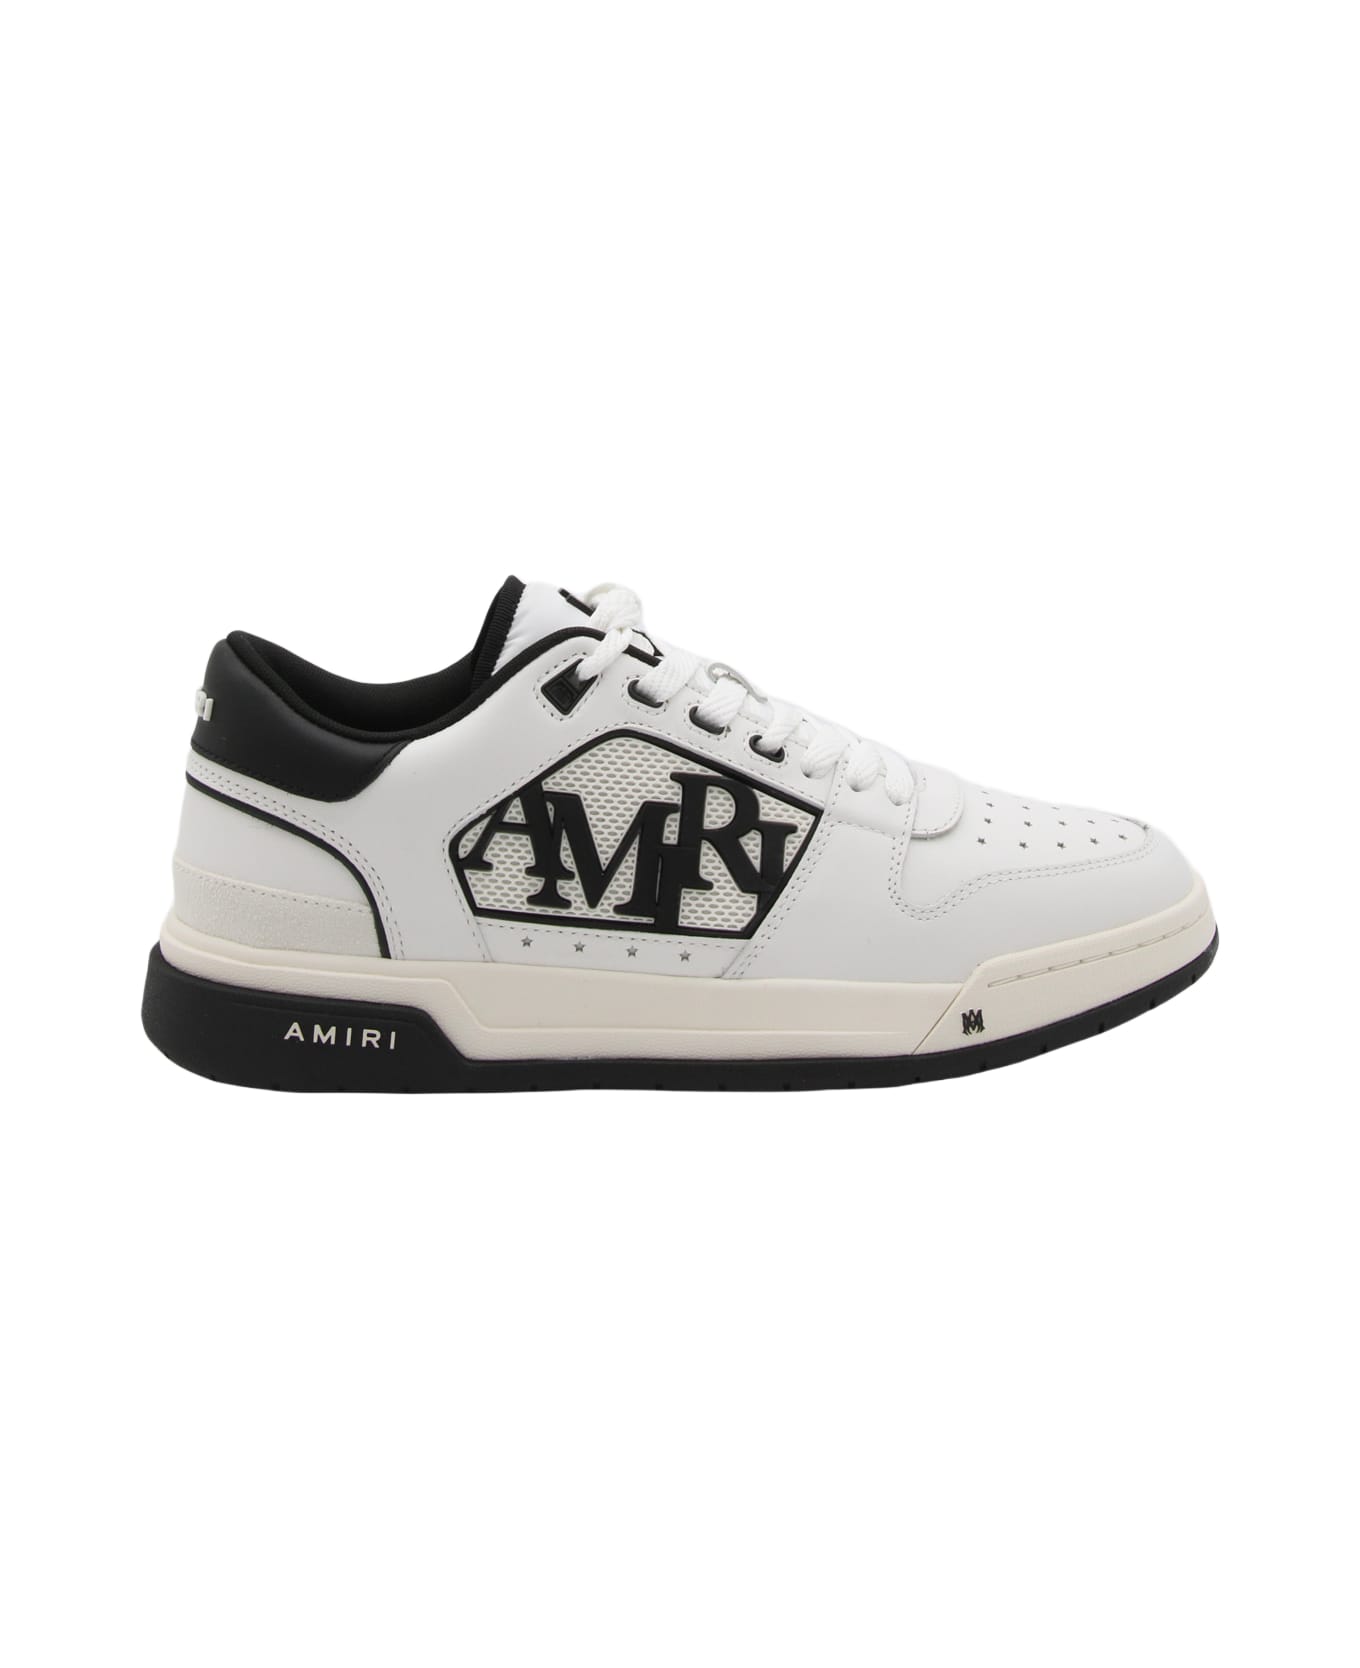 AMIRI White And Black Leather Sneakers - White